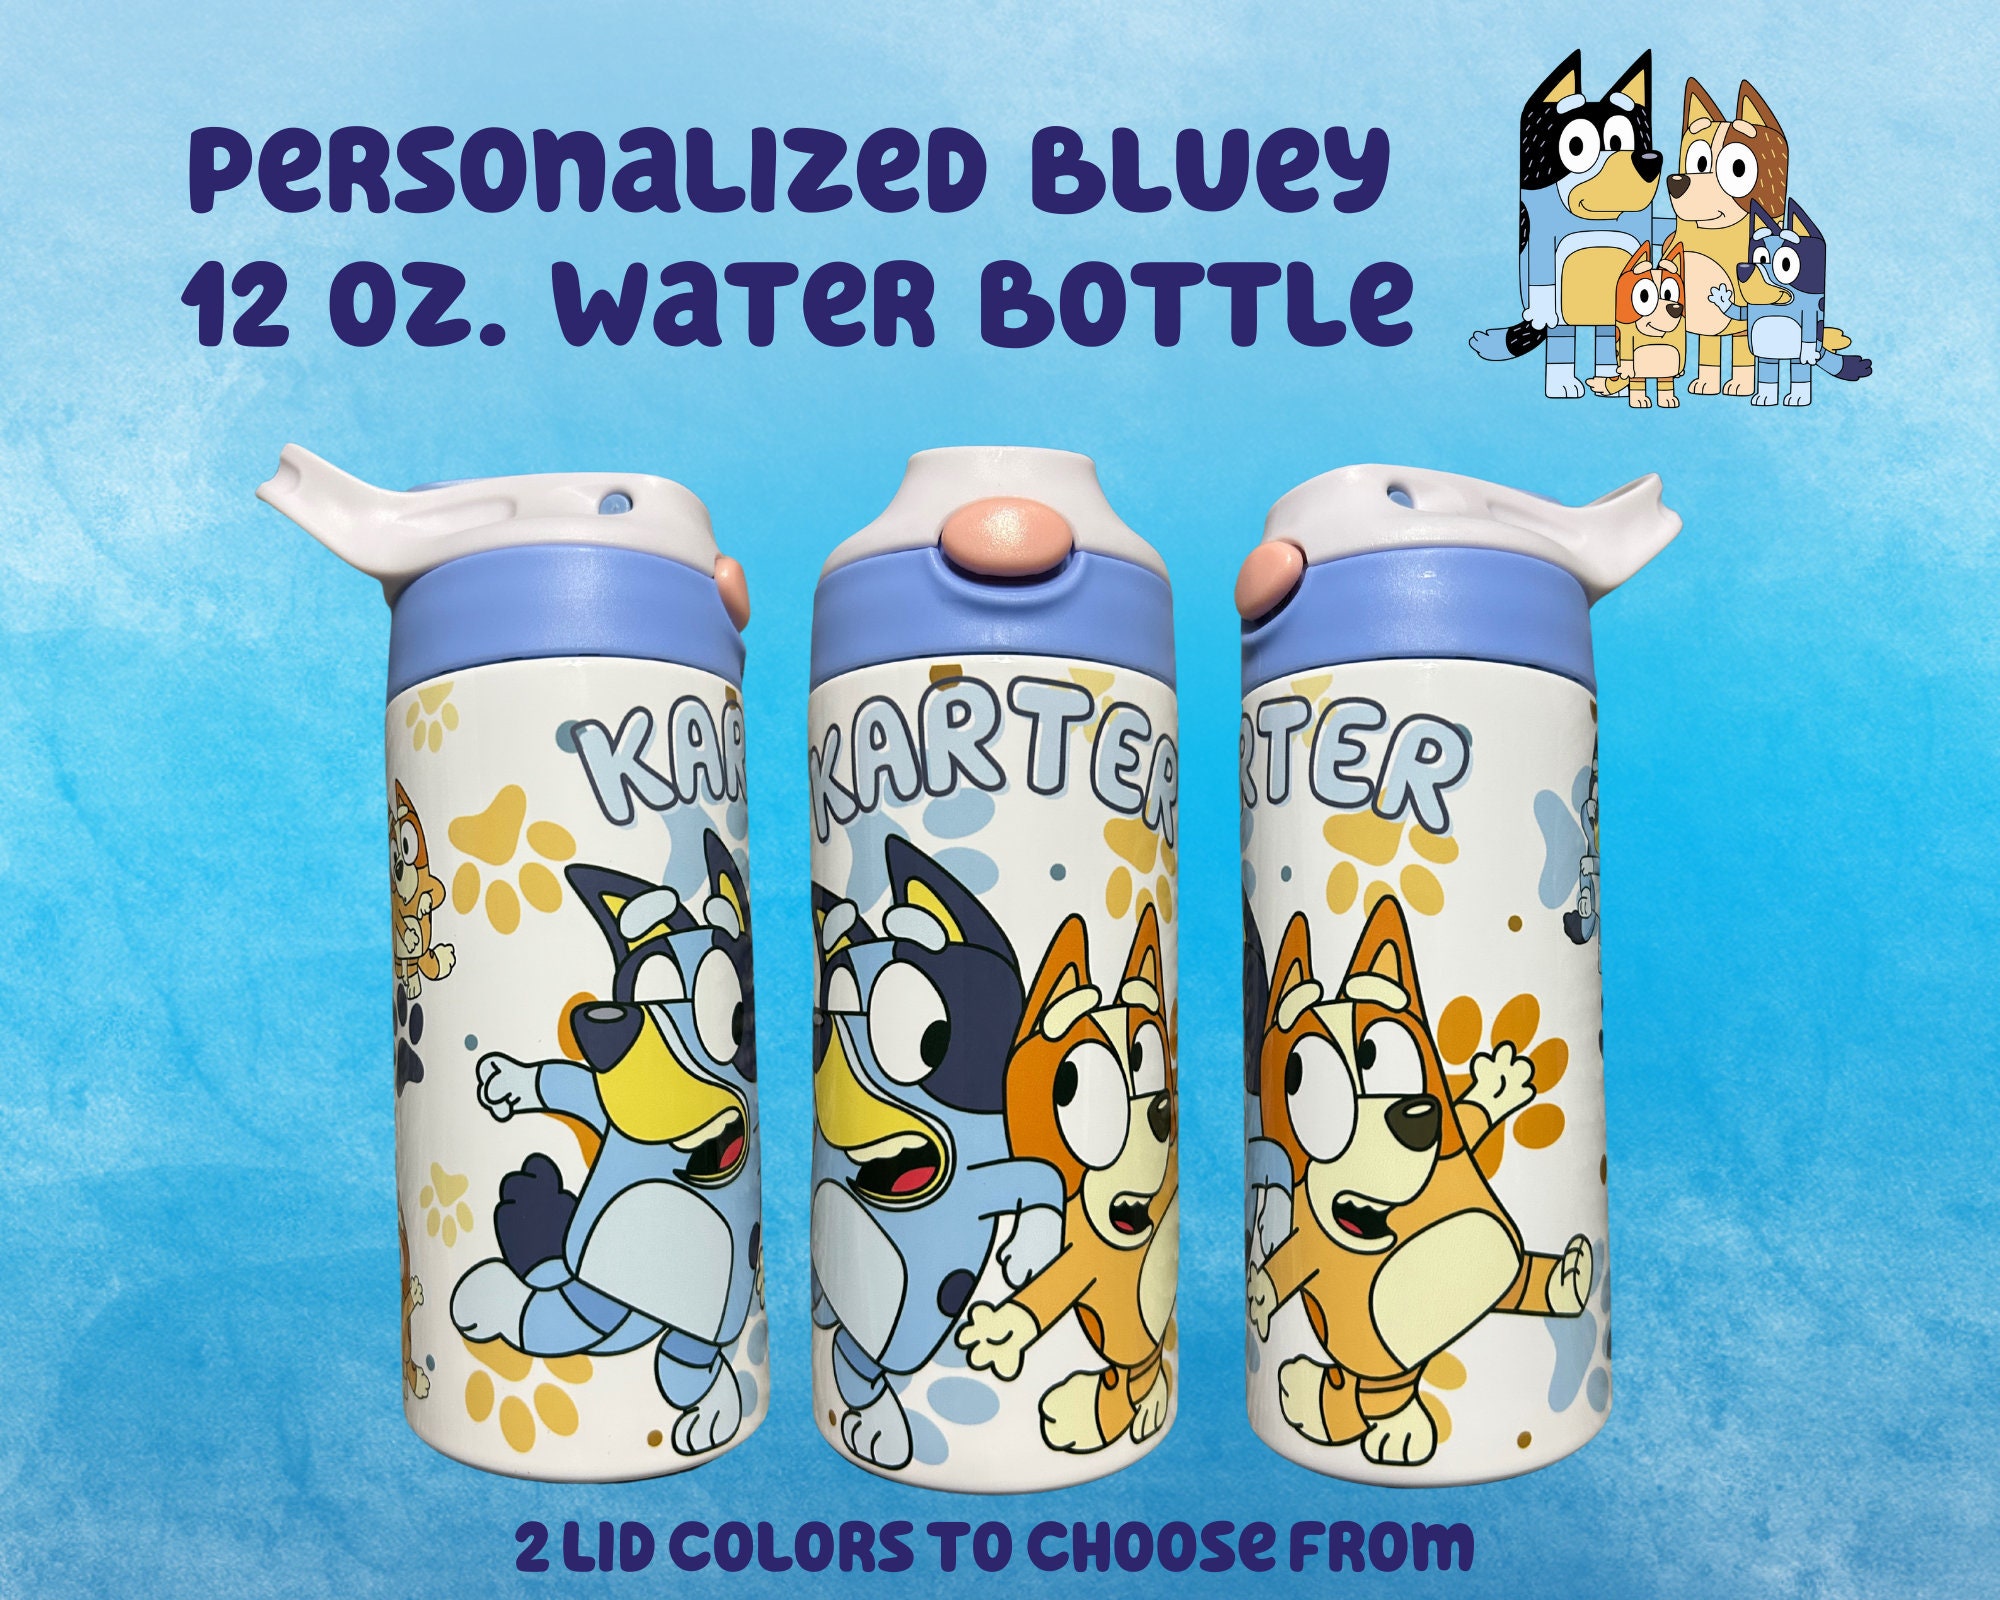 Custom Bluey Dad Stainless Steel Water Bottle By Pkurniawan598